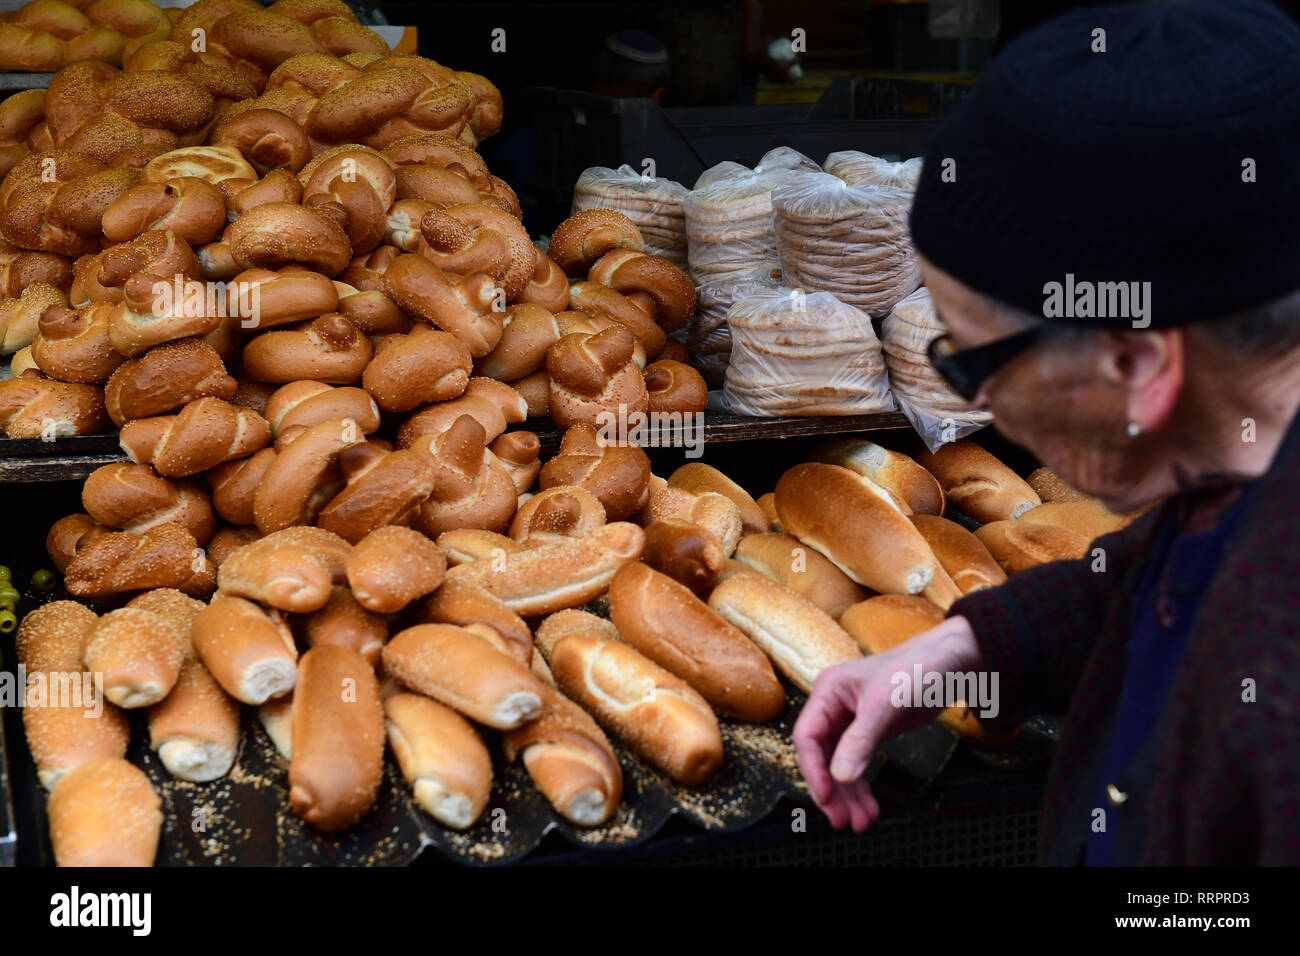 An elderly woman walks past a bread stall at Yehuda Market in Jerusalem, Israel Stock Photo